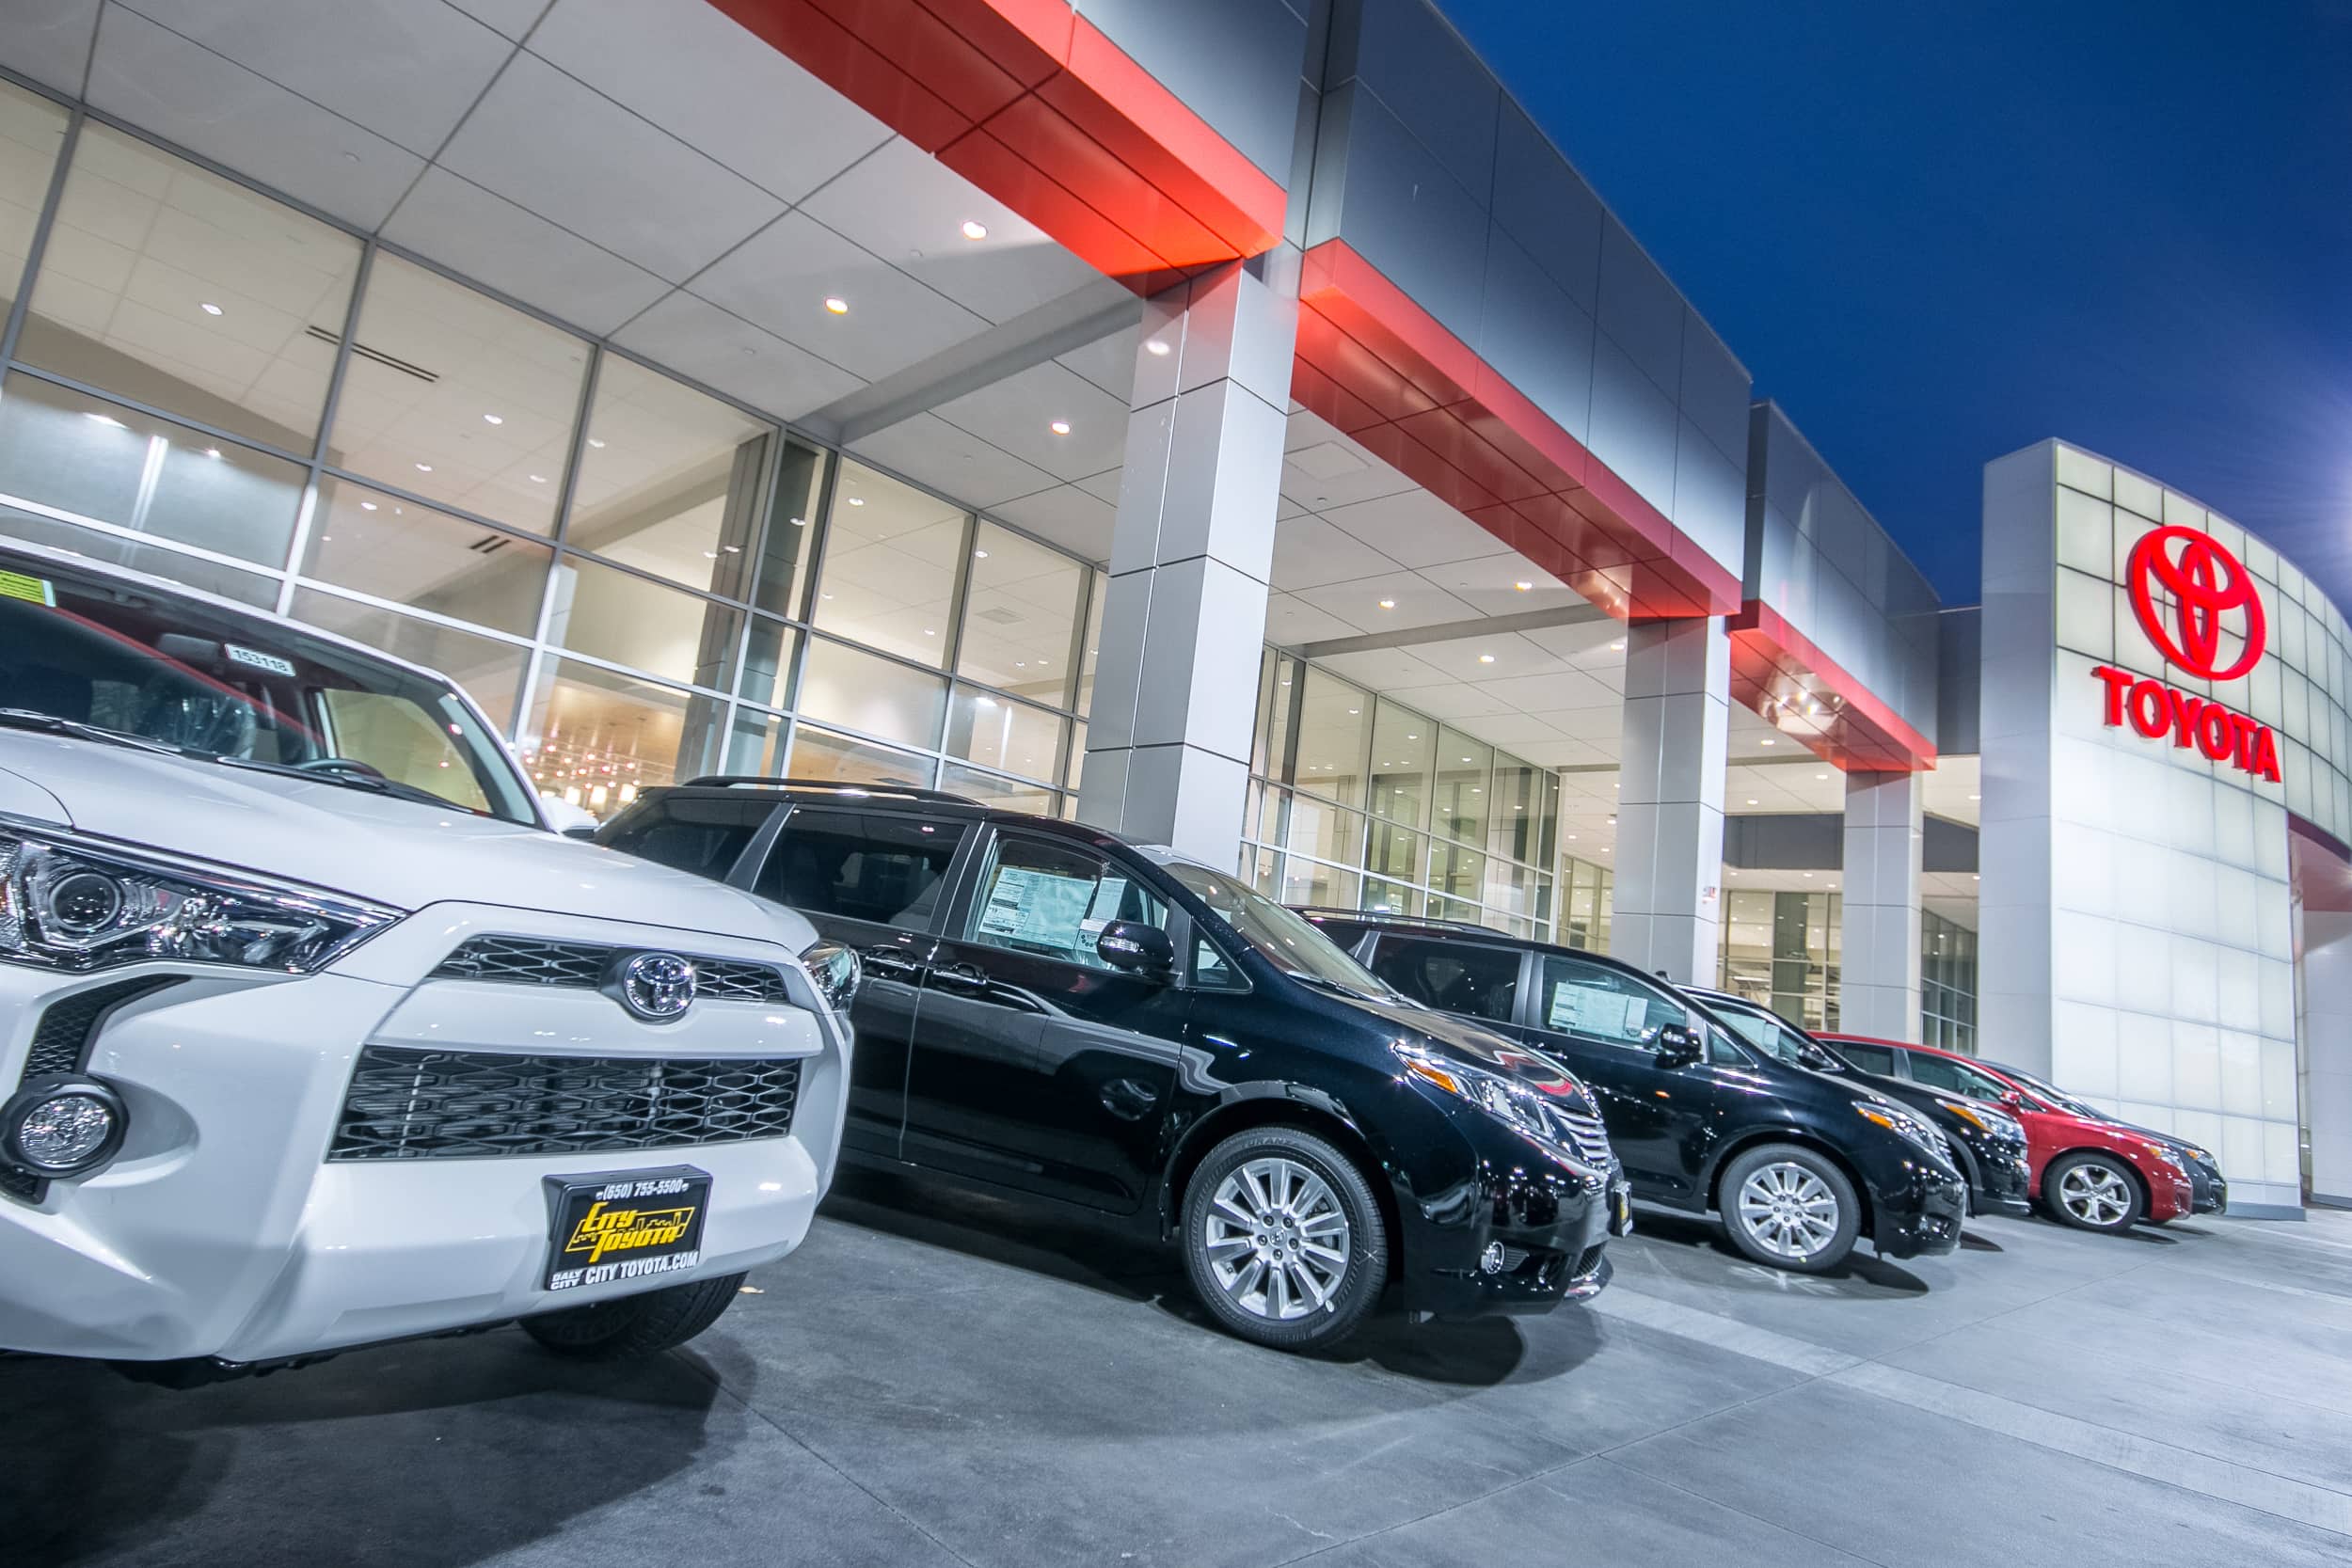 City Toyota Rent a Car - Daly City, CA, US, 1 month car rental